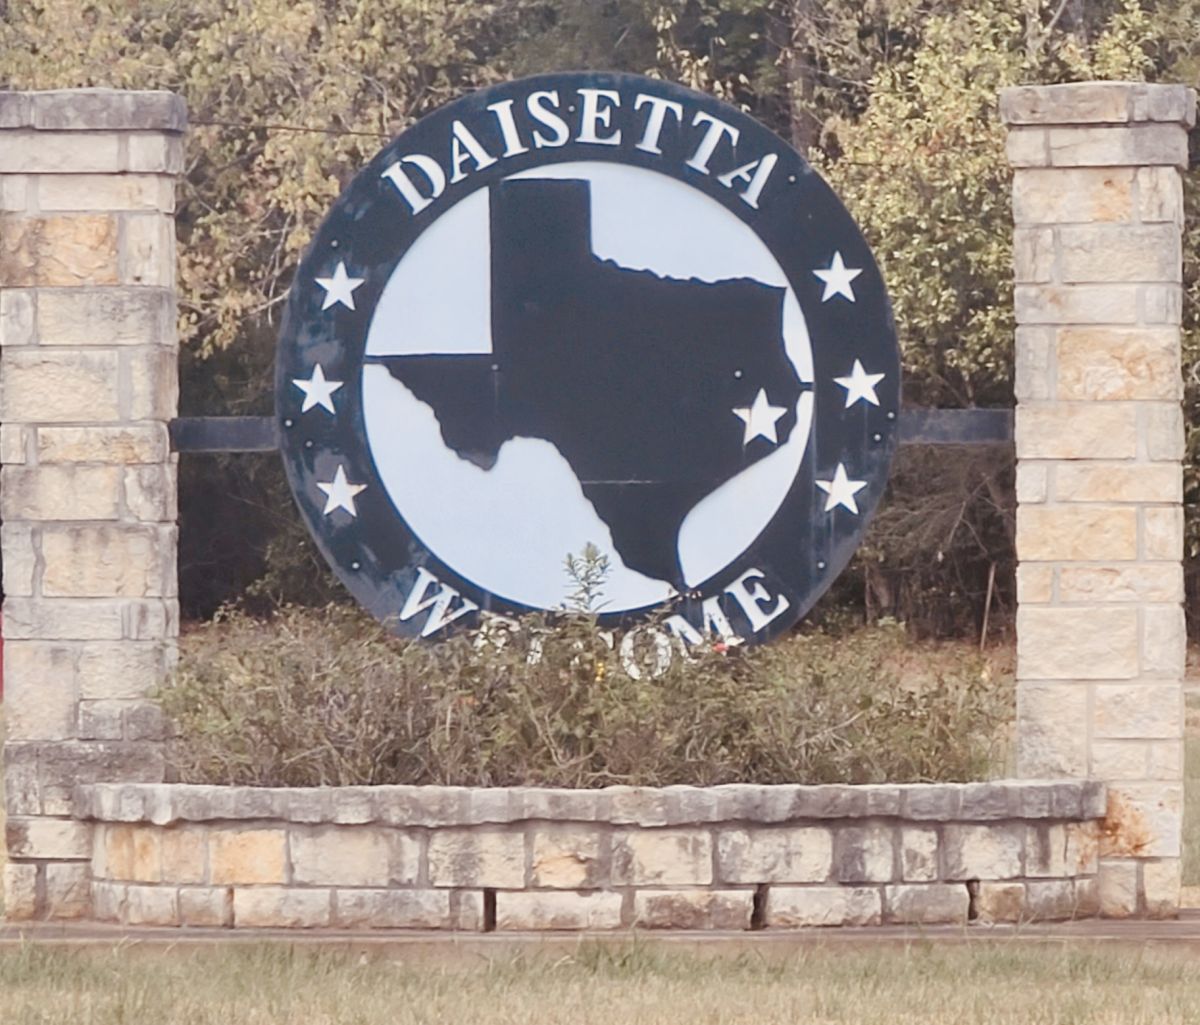 Welcome to Daisetta